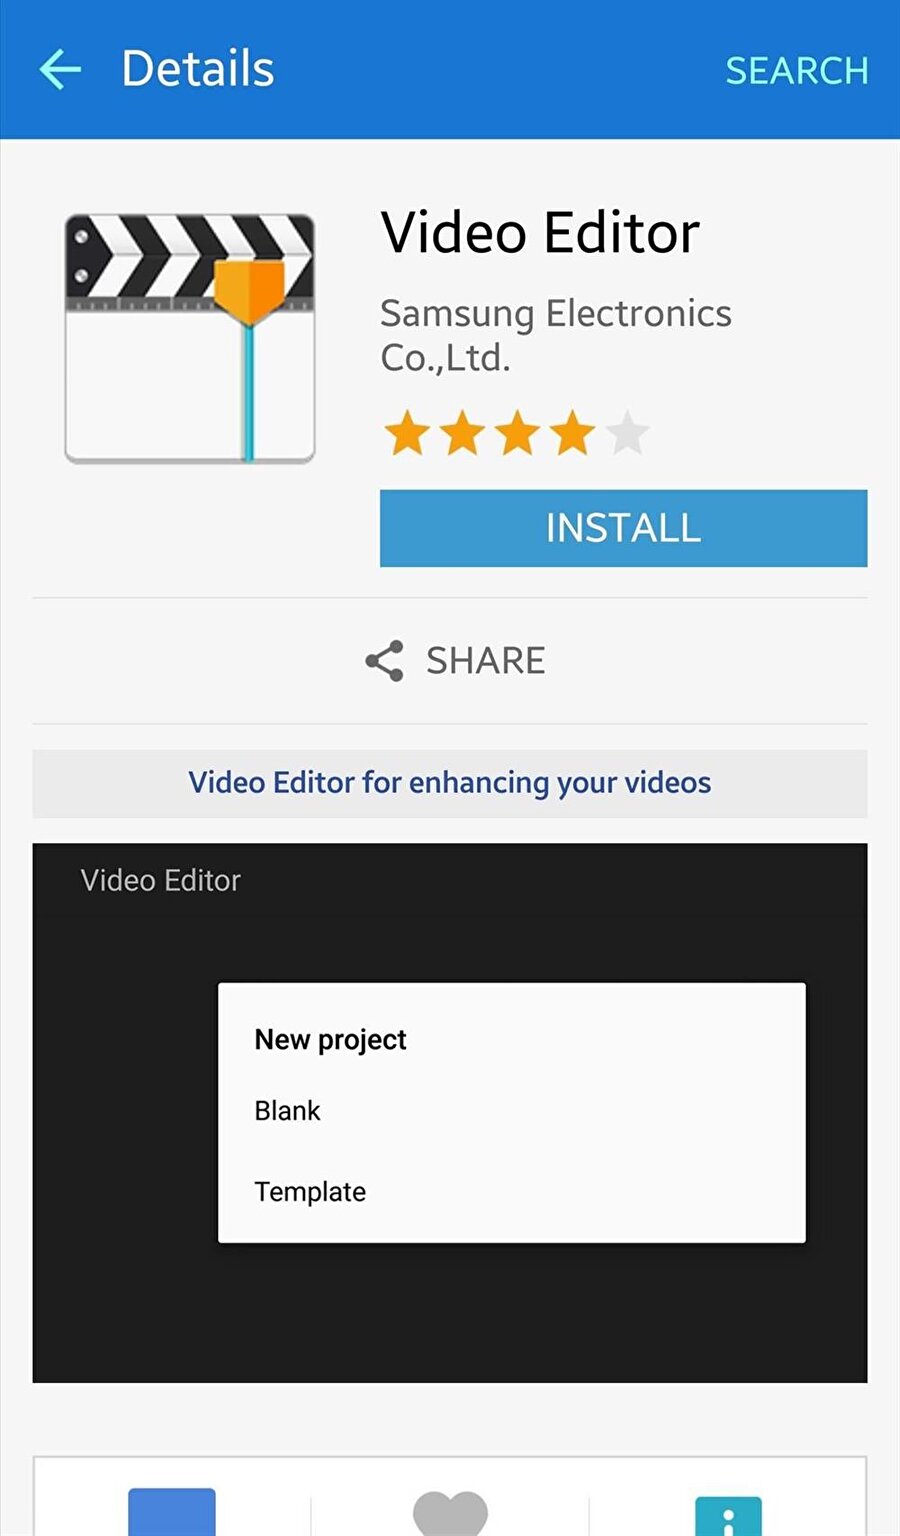 Samsung Video Editor

                                    
                                    
                                    
                                    
                                
                                
                                
                                